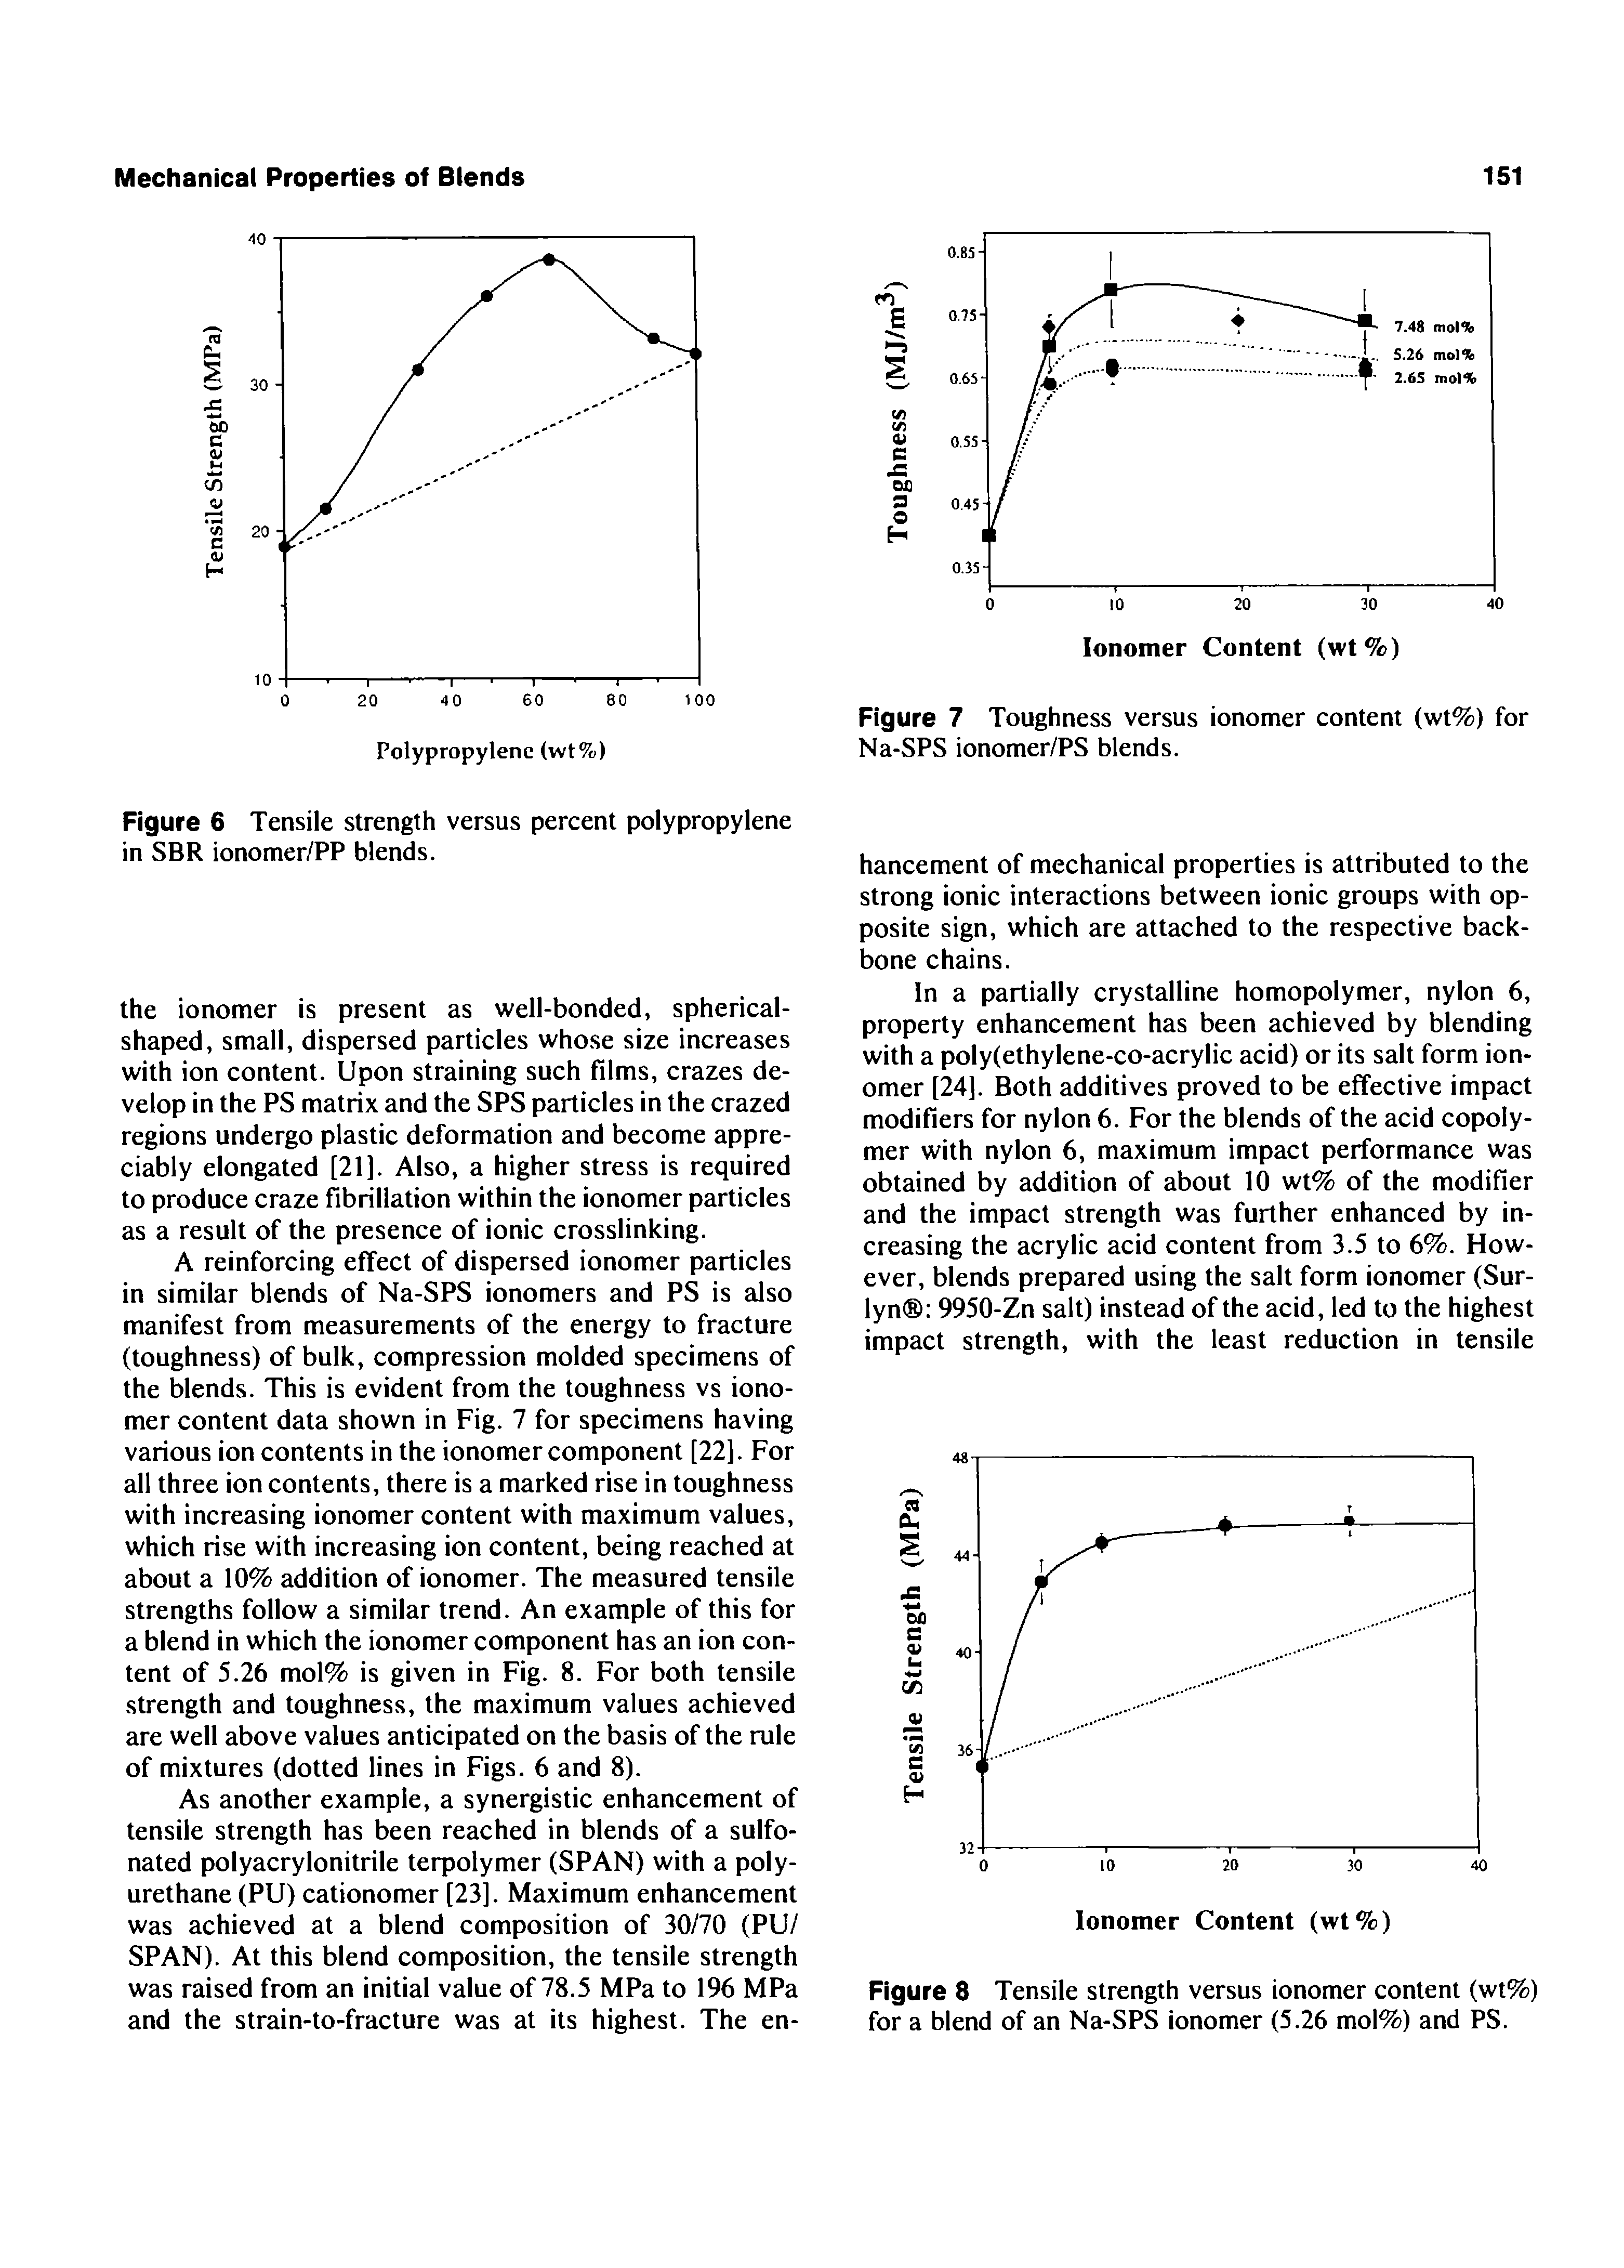 Figure 6 Tensile strength versus percent polypropylene in SBR ionomer/PP blends.